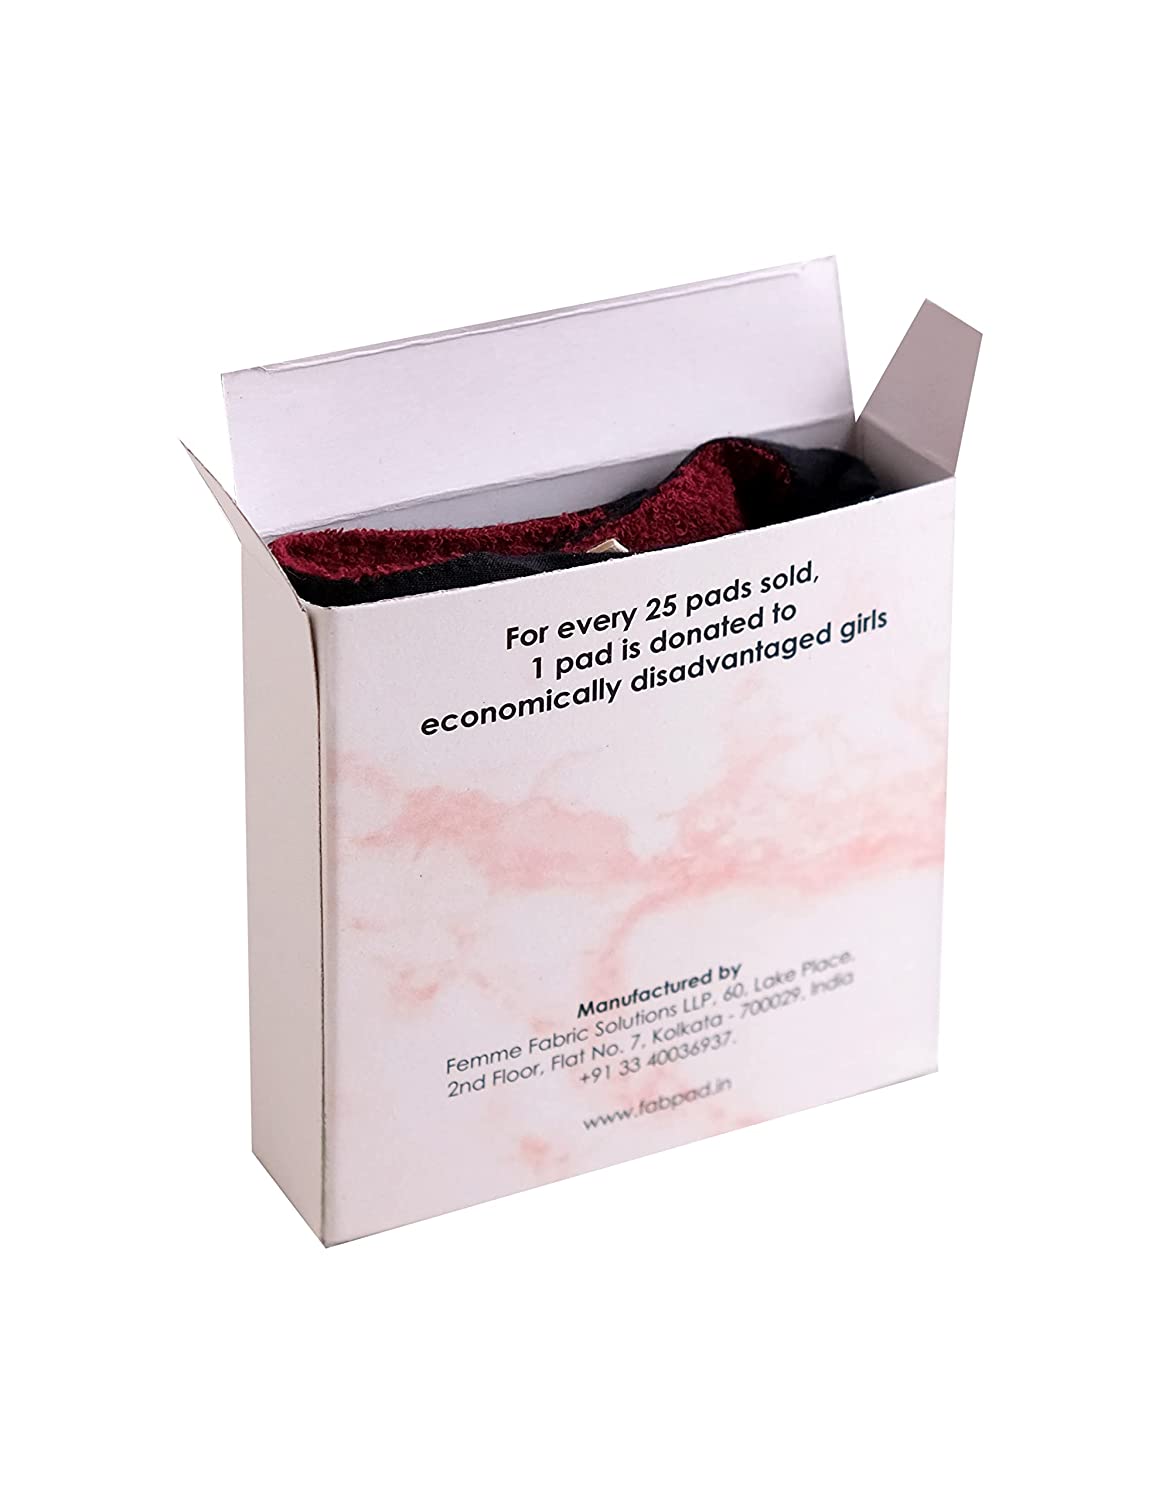 FabPad Reusable Washable Sanitary Cloth Pads Napkins Eco-Friendly Menstrual  Hygiene Solutions (Pack of 1) (Non Dye, Regular - 26.5 CM)